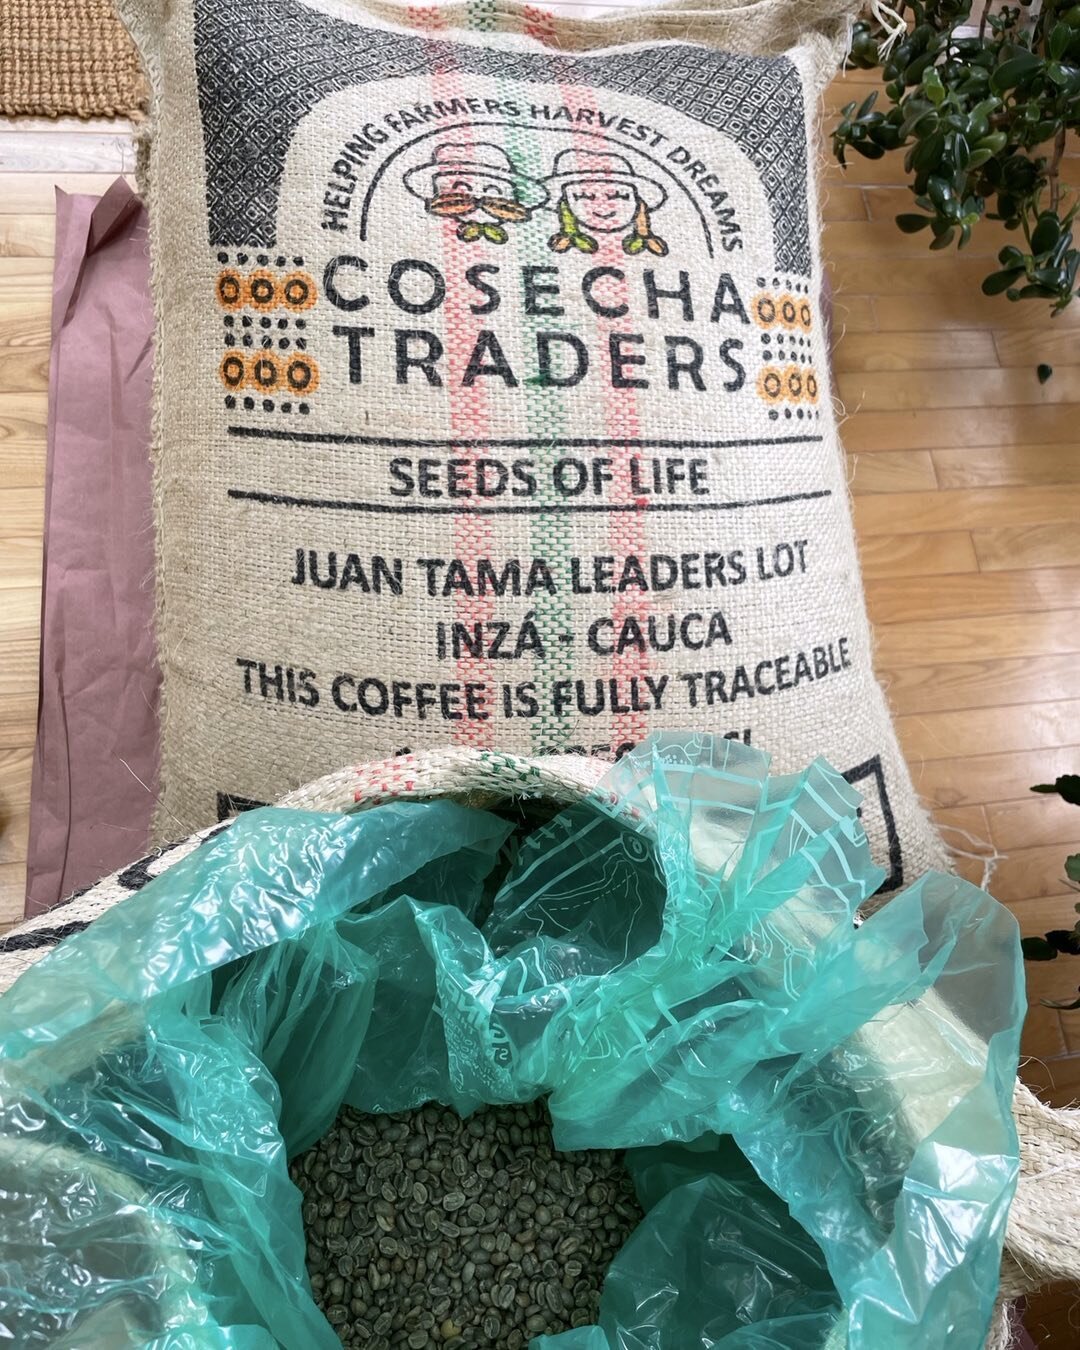 Cosecha Traders &ldquo;Seeds of Life&rdquo; Juan Tama Leaders Lot Inza- Cauca Colombia Coffee coming to @locobeanscoffee this week. Roasting it today 🎉🎊🙏 #freshroastedcoffee #locobeanscoffeeroundtheworld #leesburgva #loveloudoun